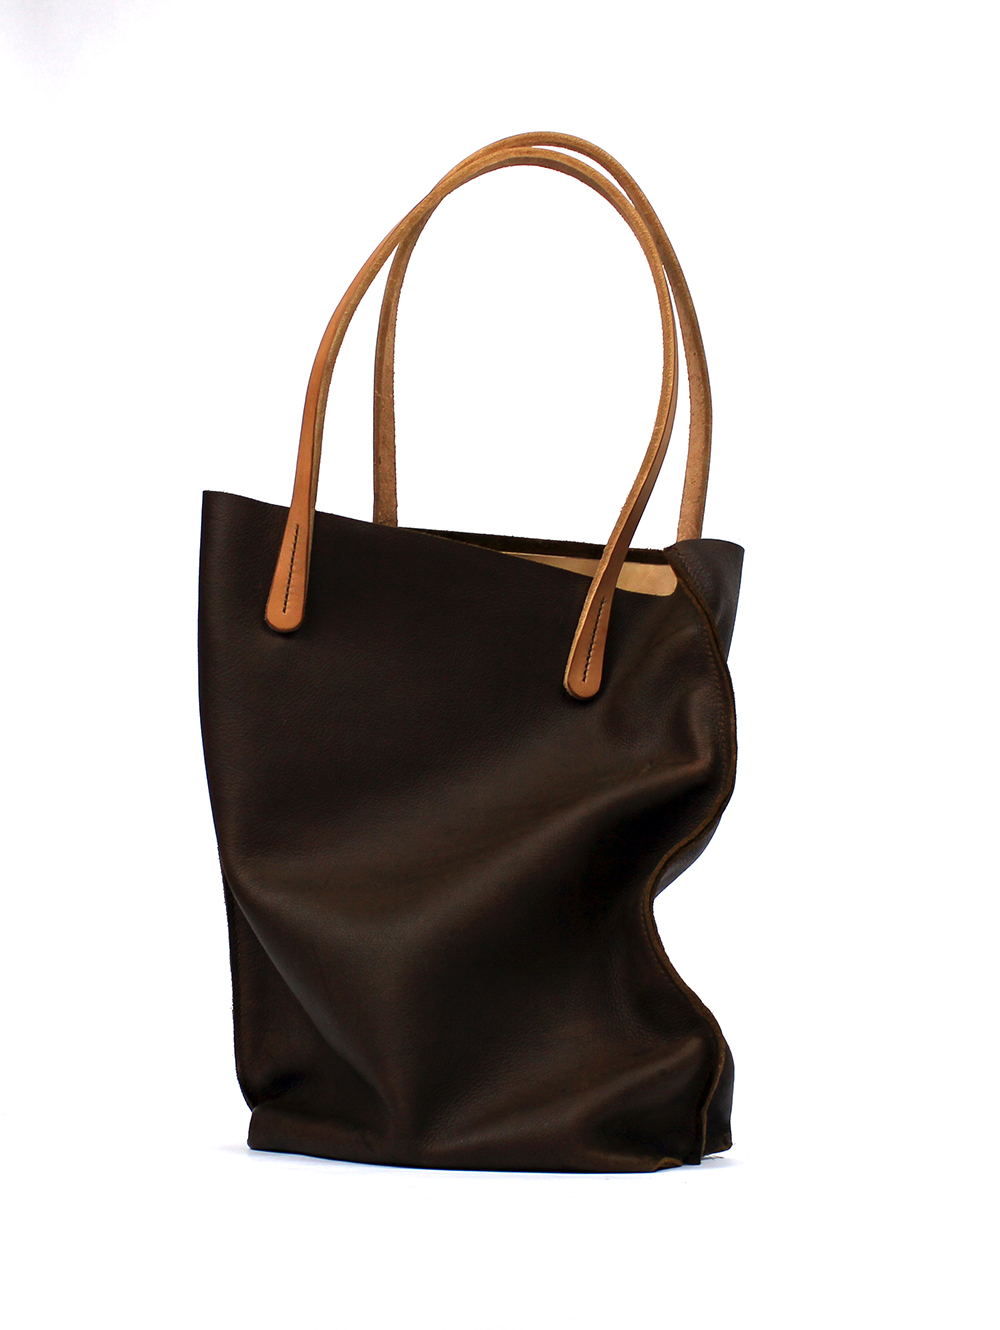 product design prototype. leather tote bag | hrrundel design